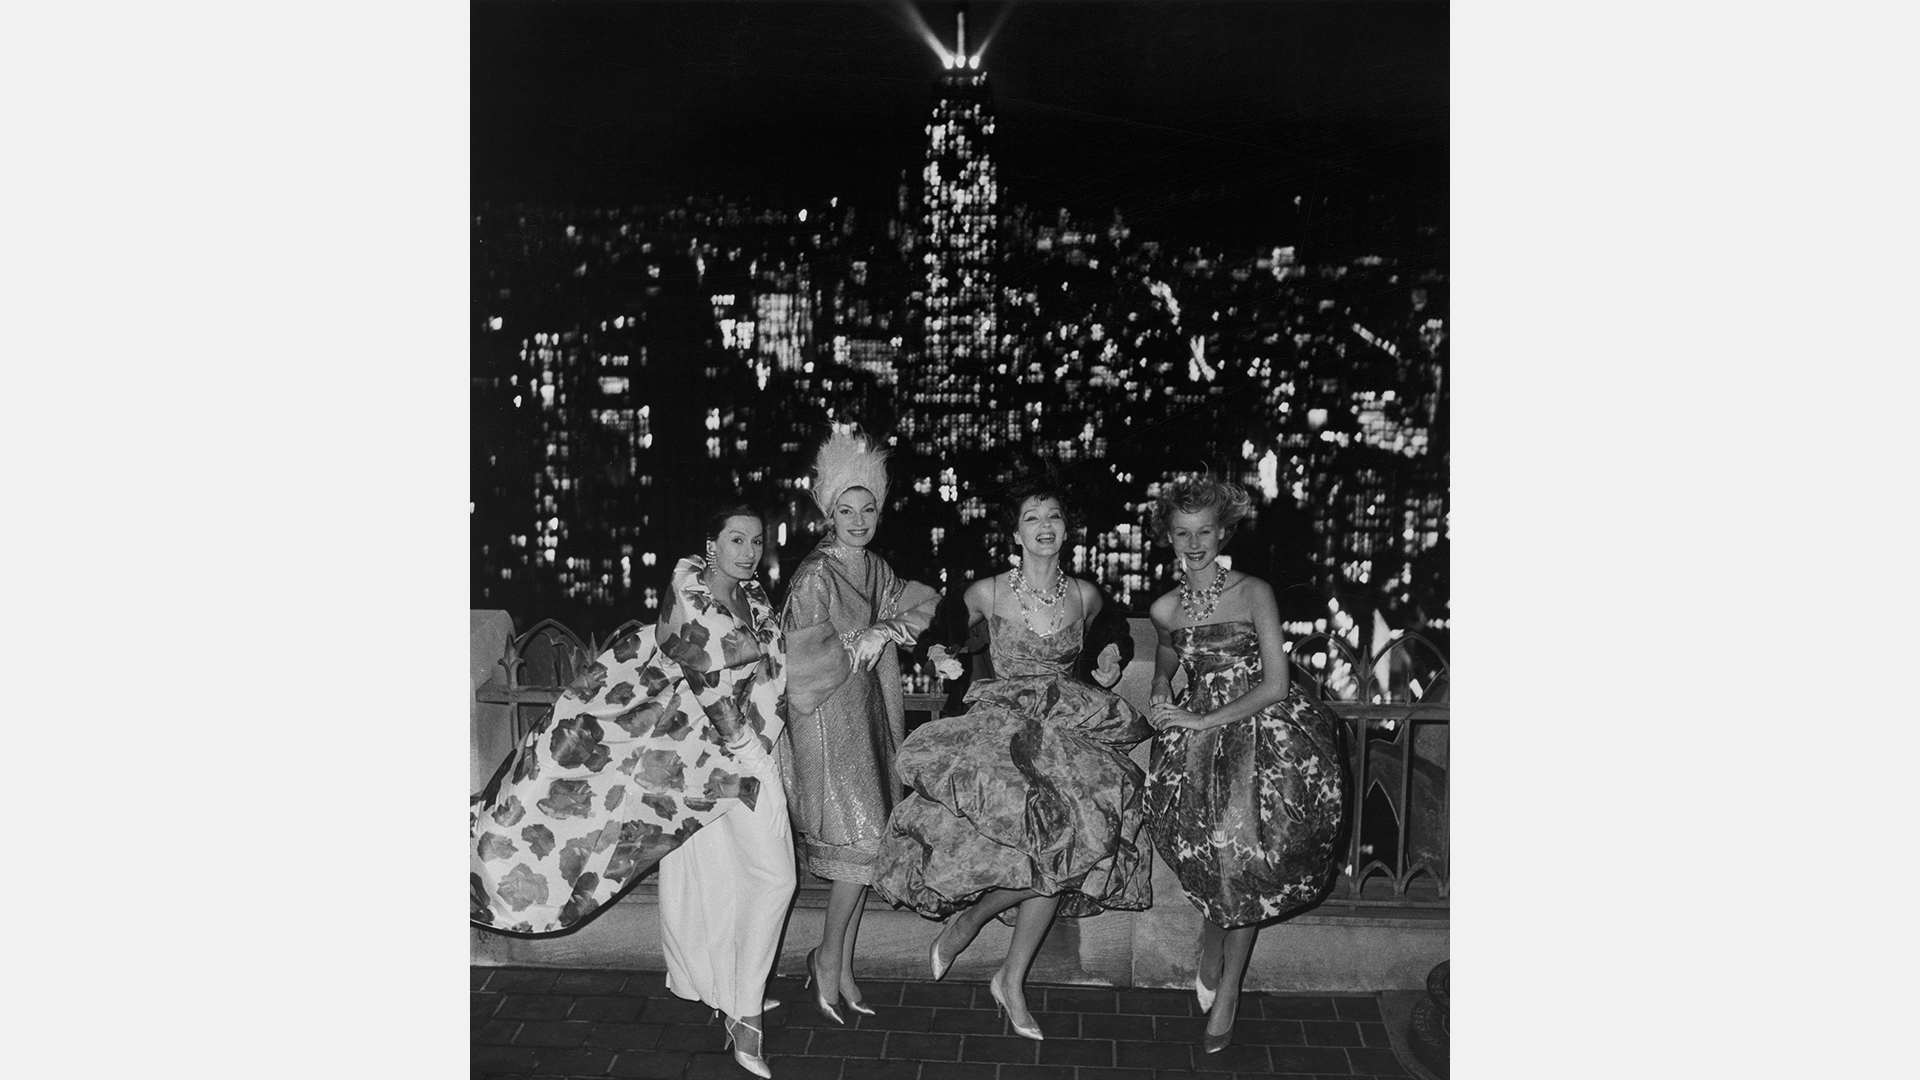 F.C. Gundlach, Berliner Mode, fotografiert auf dem Dach des RCA Building, New York 1958 | Stiftung F.C. Gundlach, Hamburg; Repro: Anja Elisabeth Witte